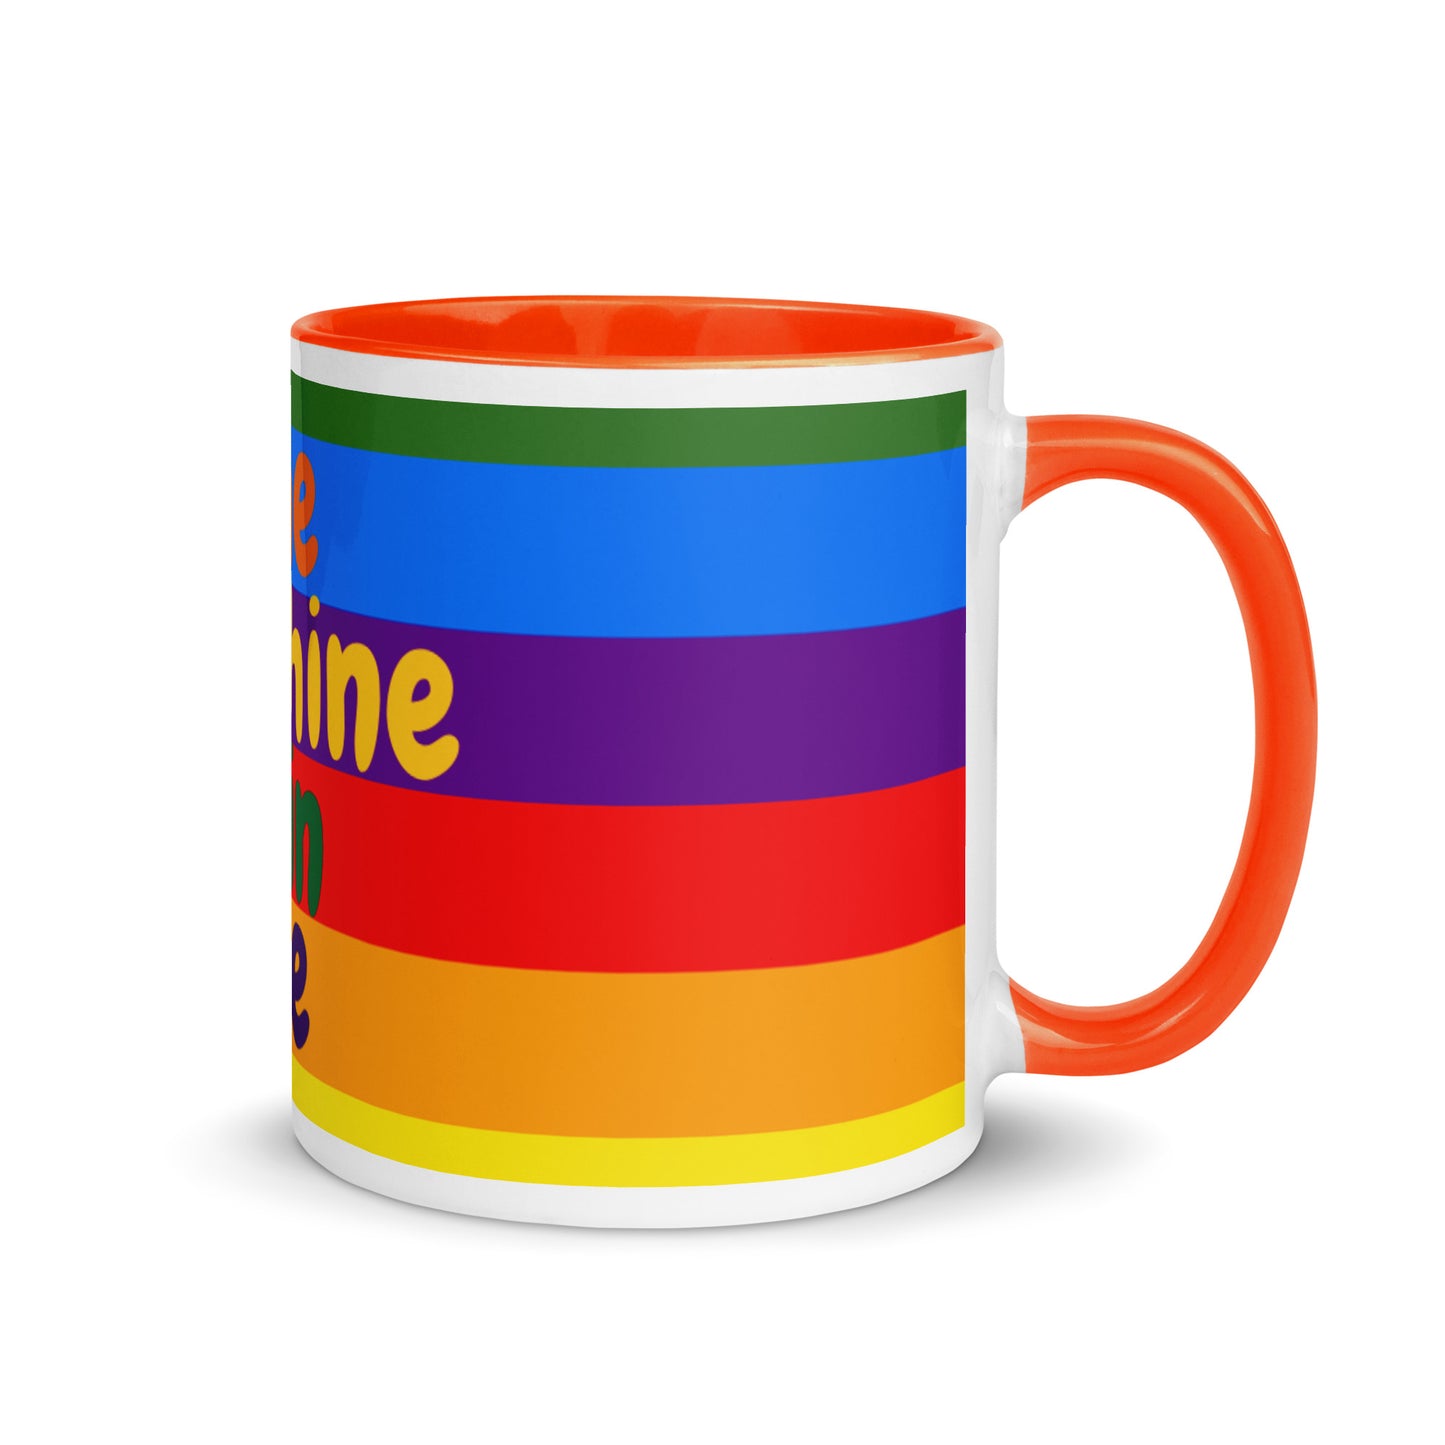 Rainbow Color Mug - The Sunshine is in me